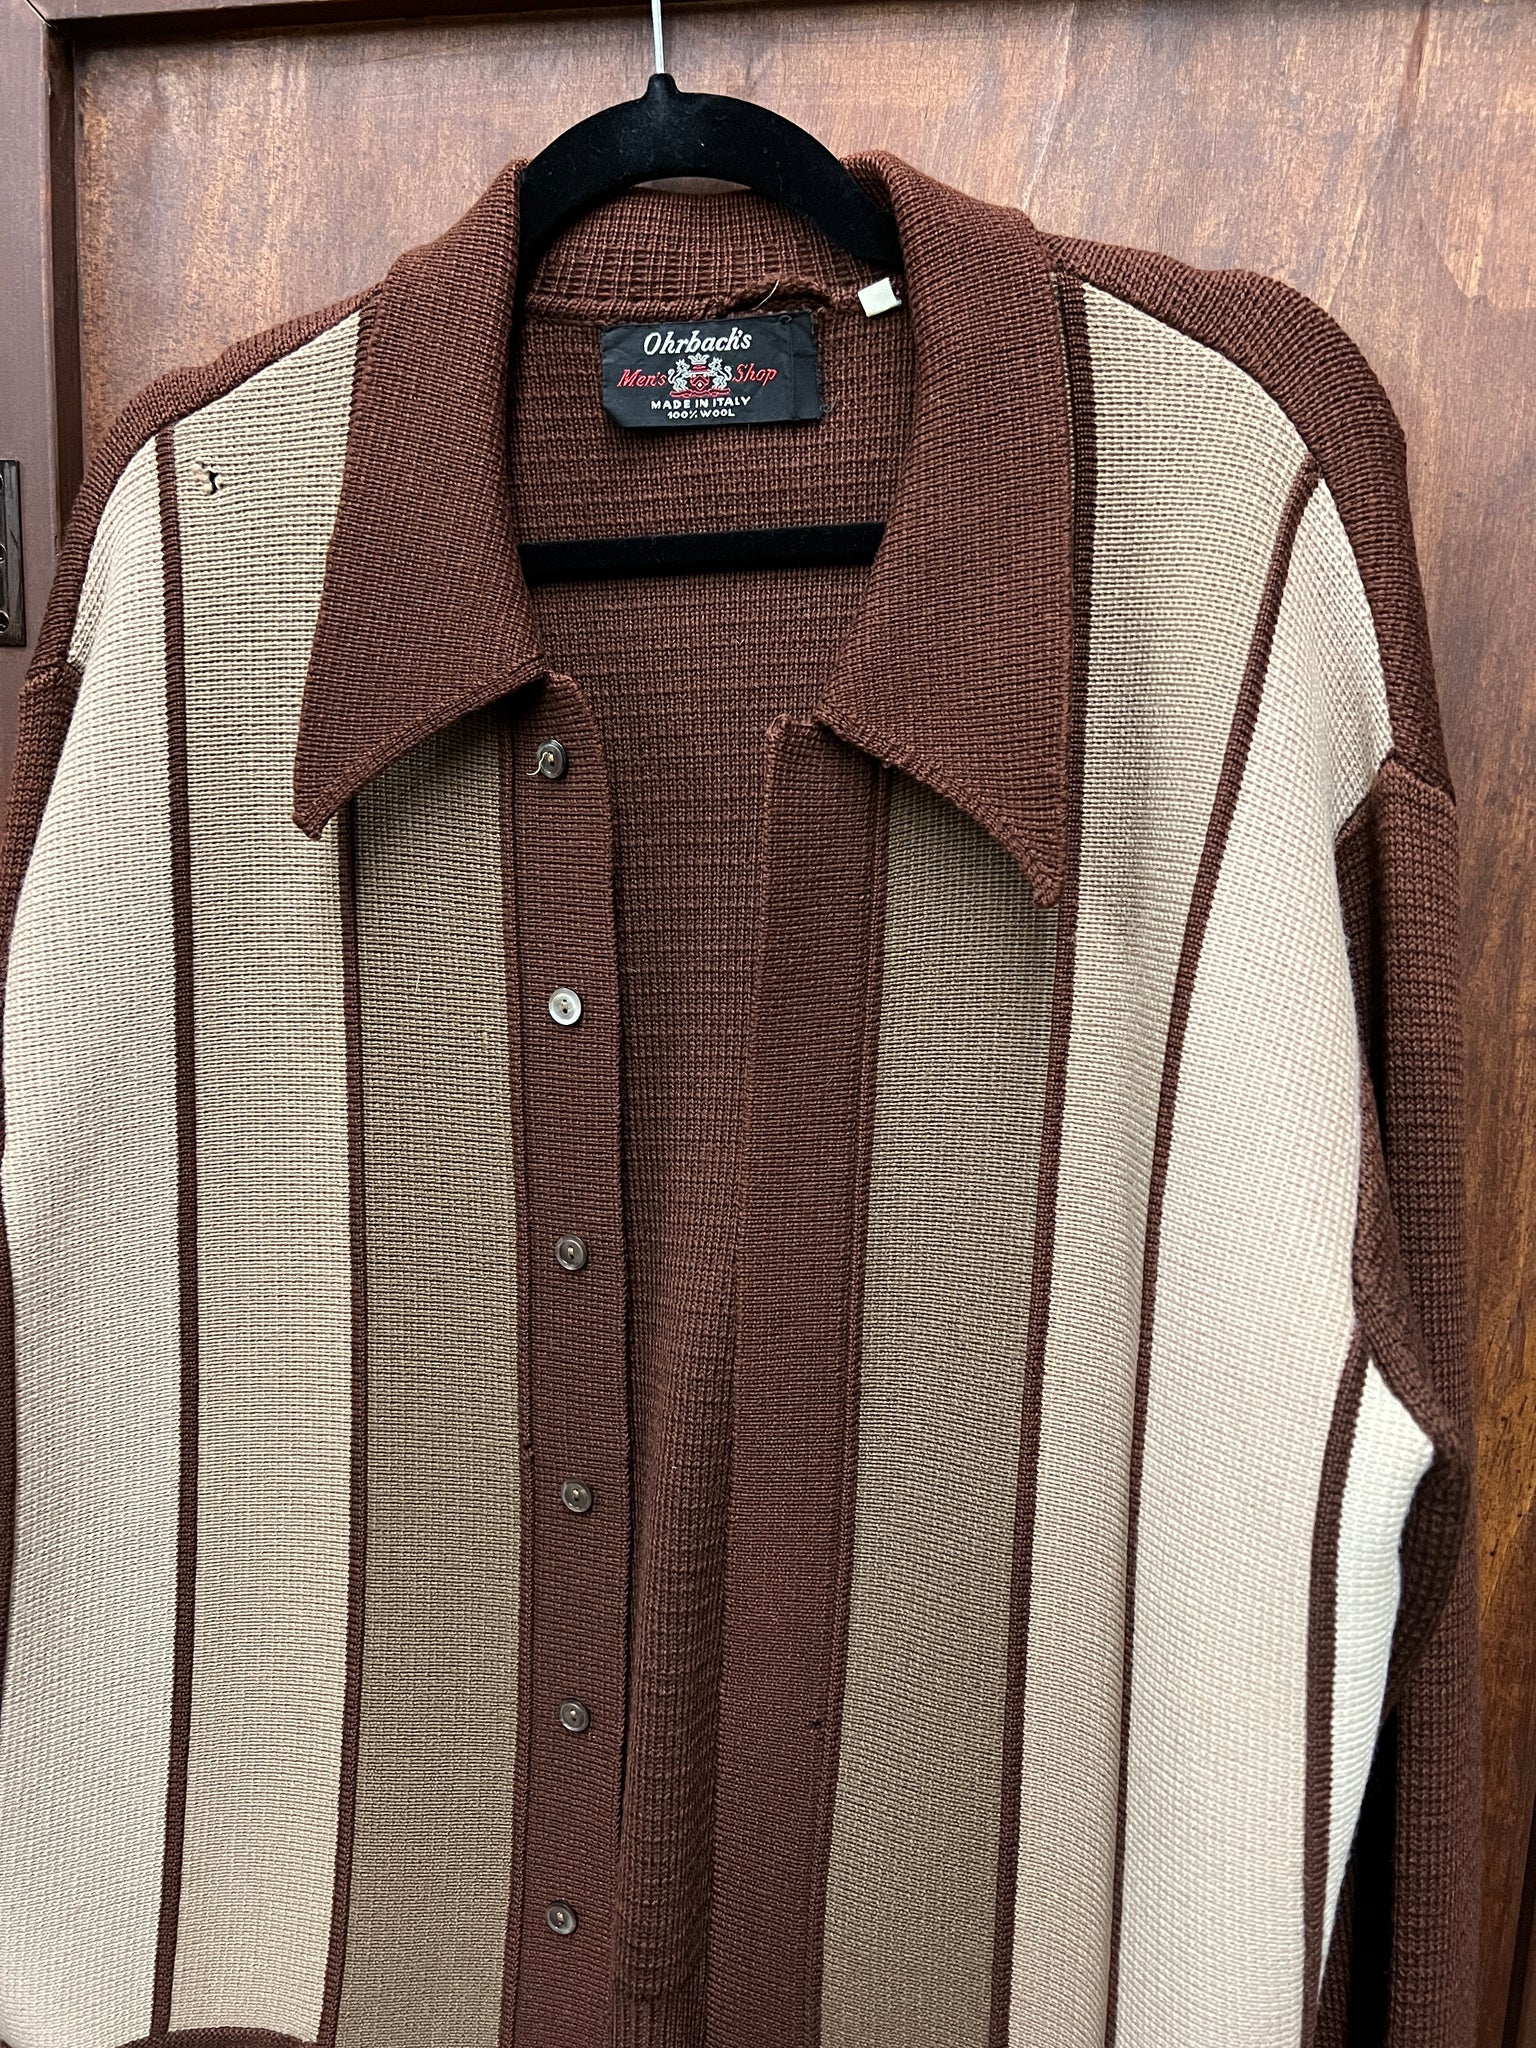 1970s MENS SWEATER-Orbach's brown collared buttondown w/ stripes